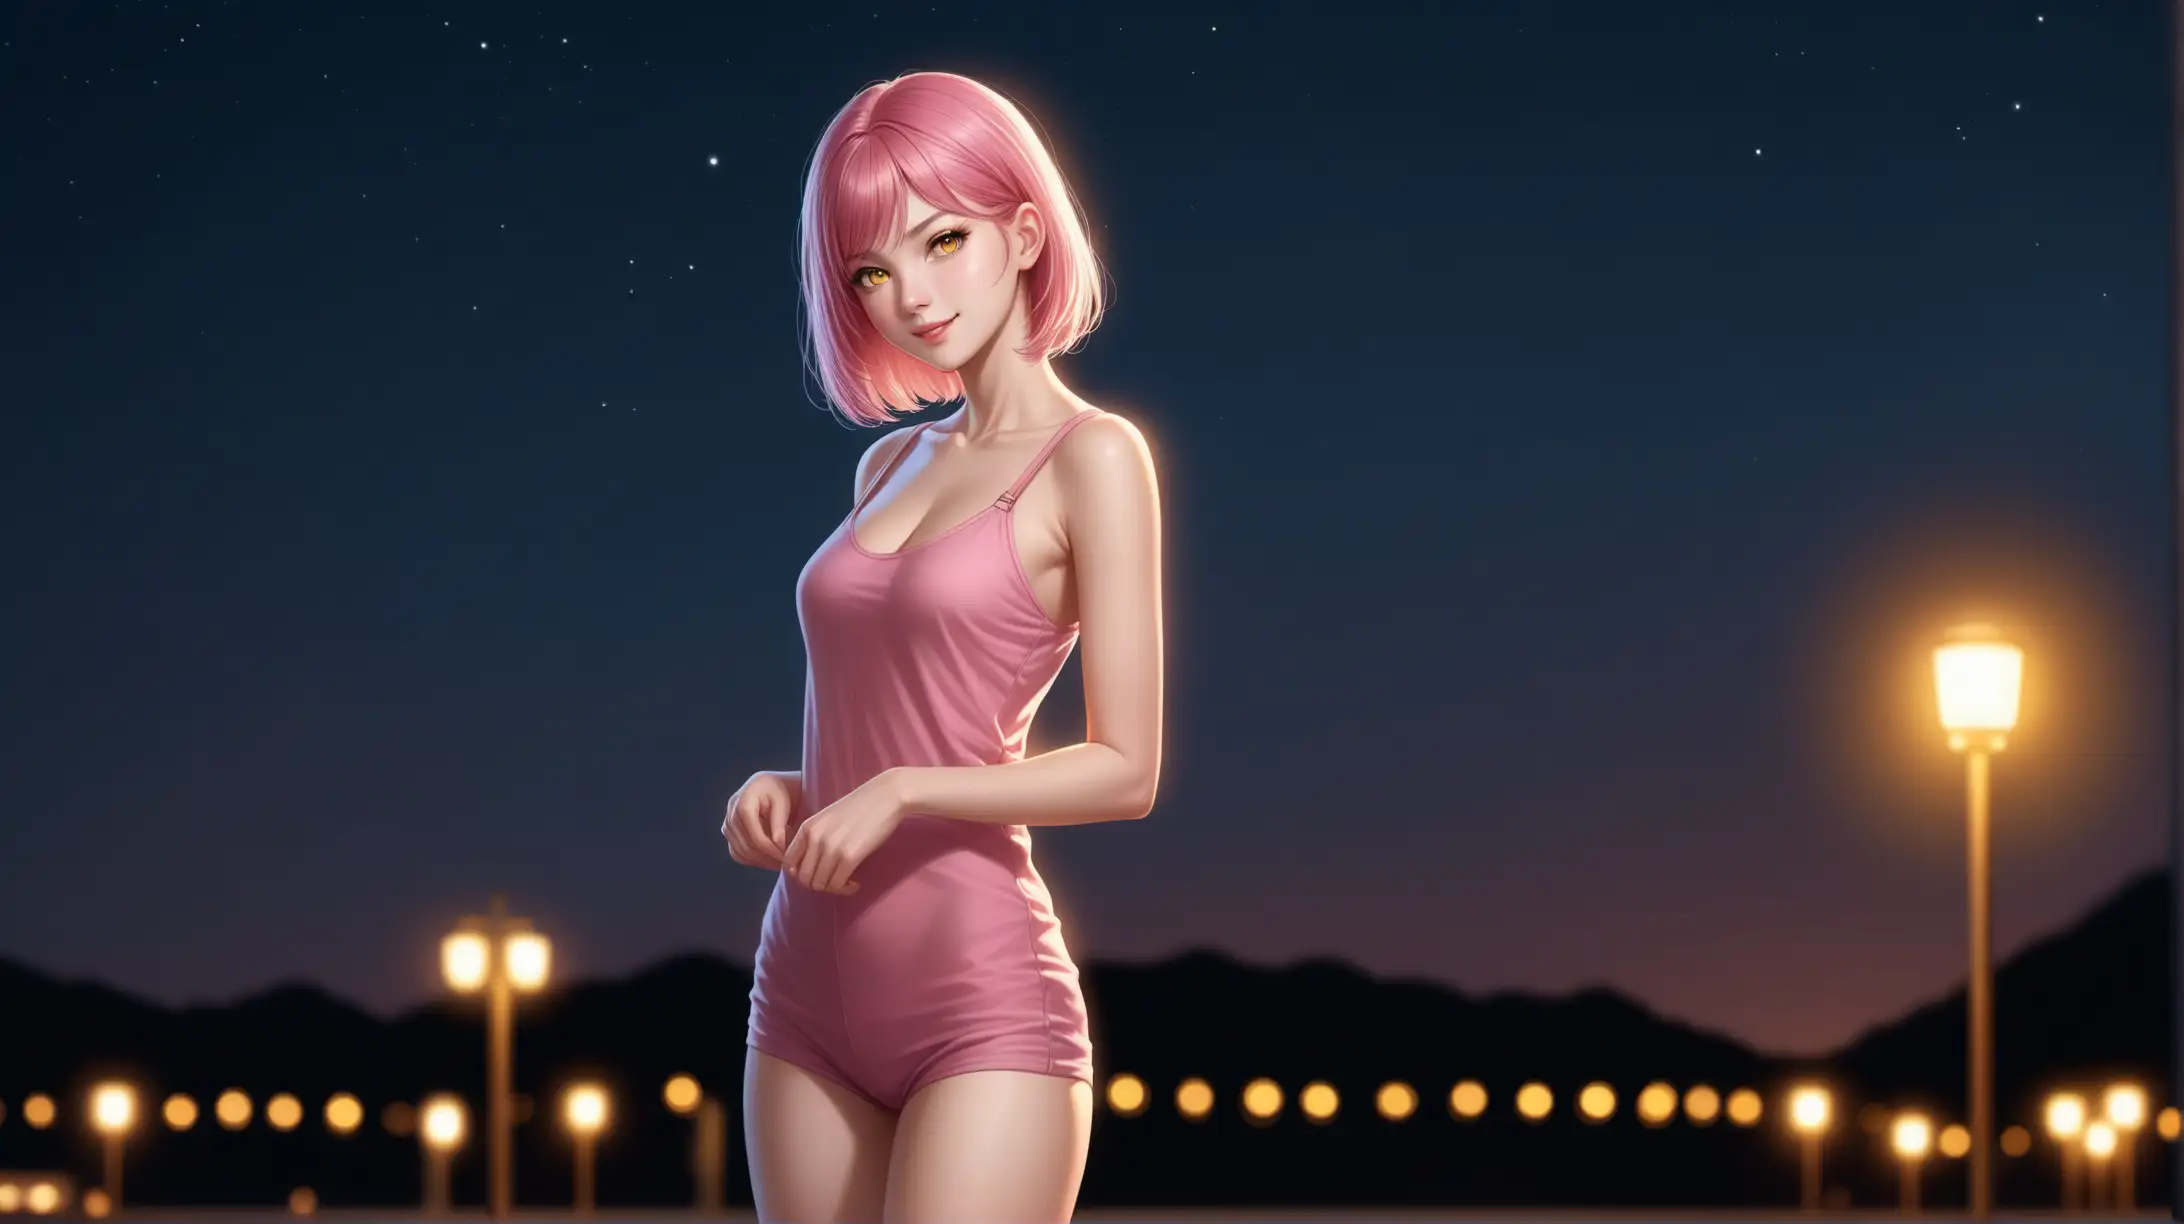 Stylish Woman with Pink Hair Enjoying Night Outdoors